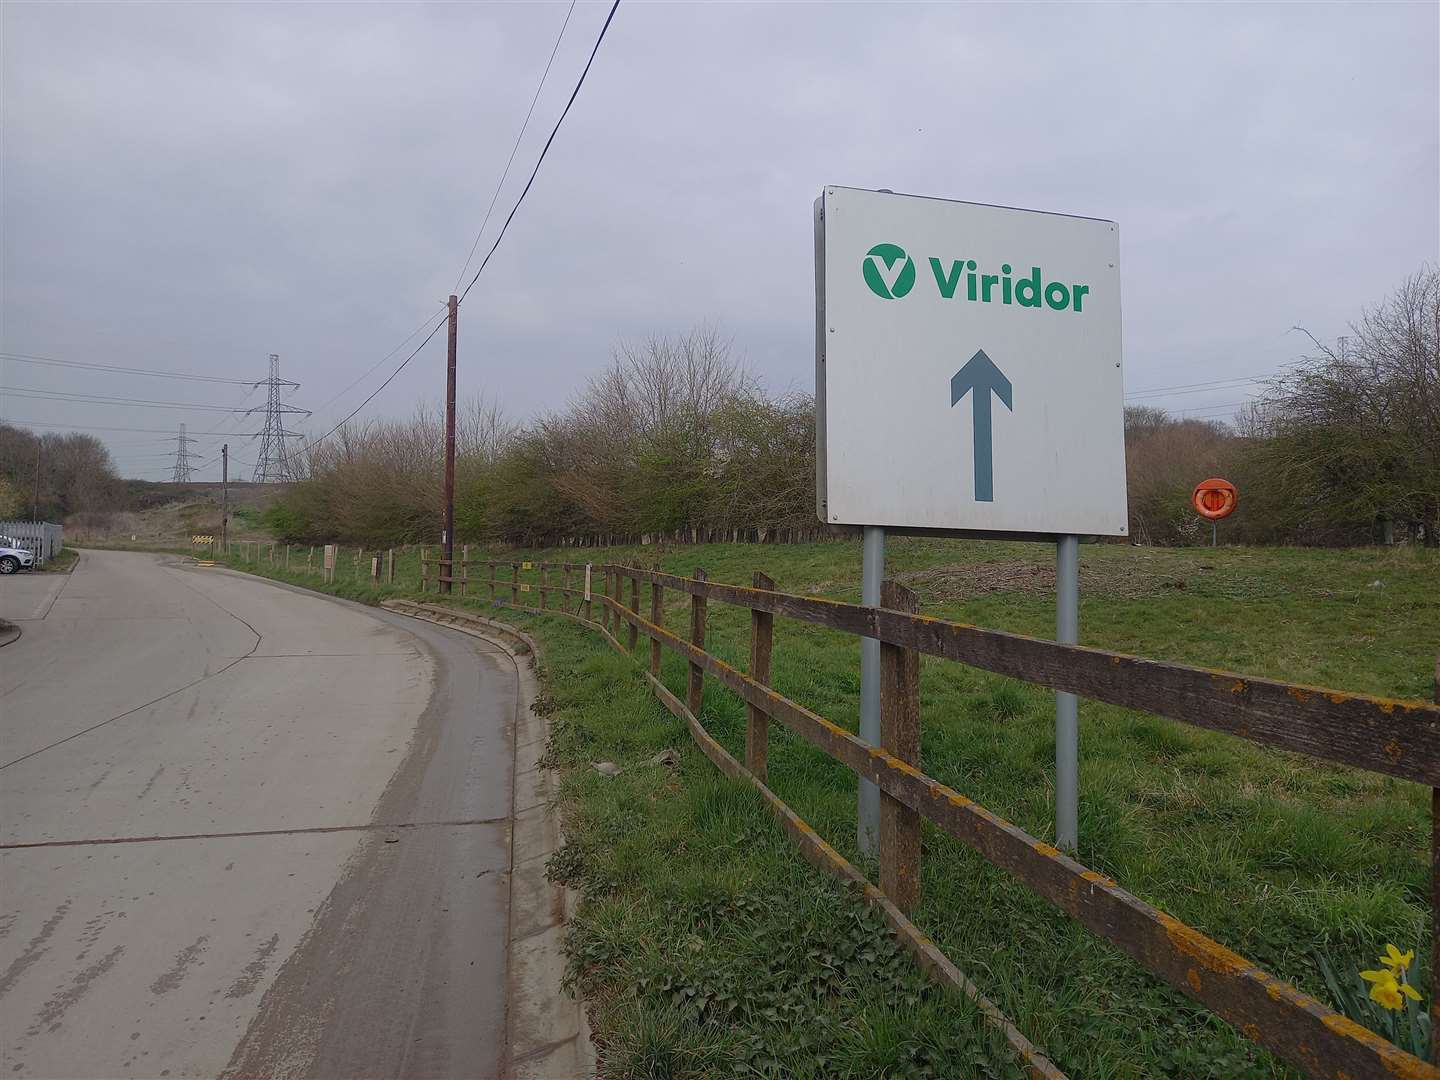 Viridor runs the landfill site